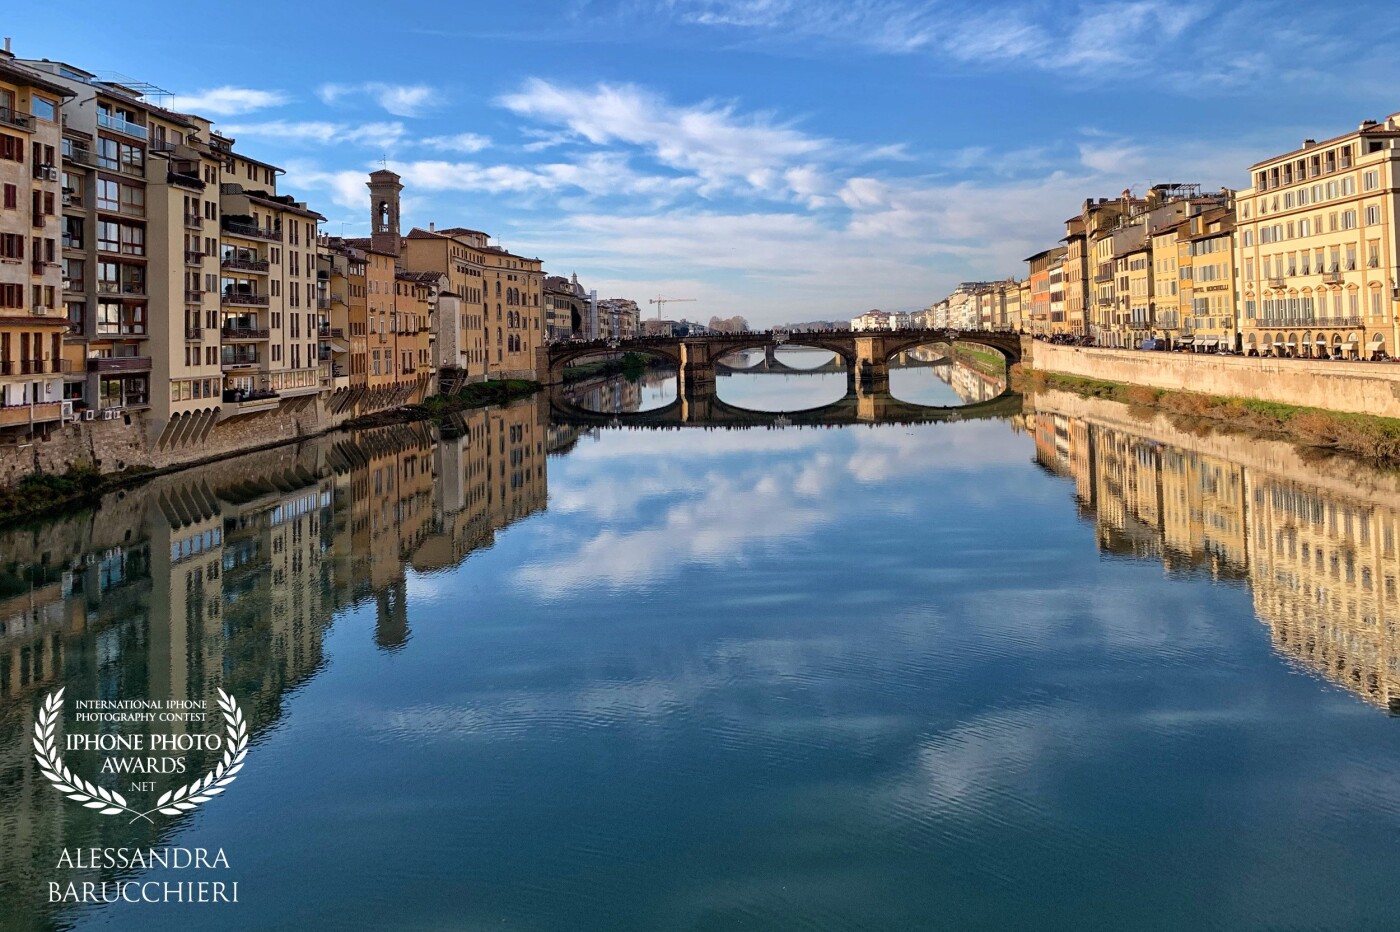 Florence, Italy<br />
The Arno river flows like a mirror between buildings and bridges. My city is always beautiful.<br />
<br />
Firenze, Italia<br />
Il fiume Arno scorre come uno specchio fra palazzi e ponti. La mia città é sempre bellissima.